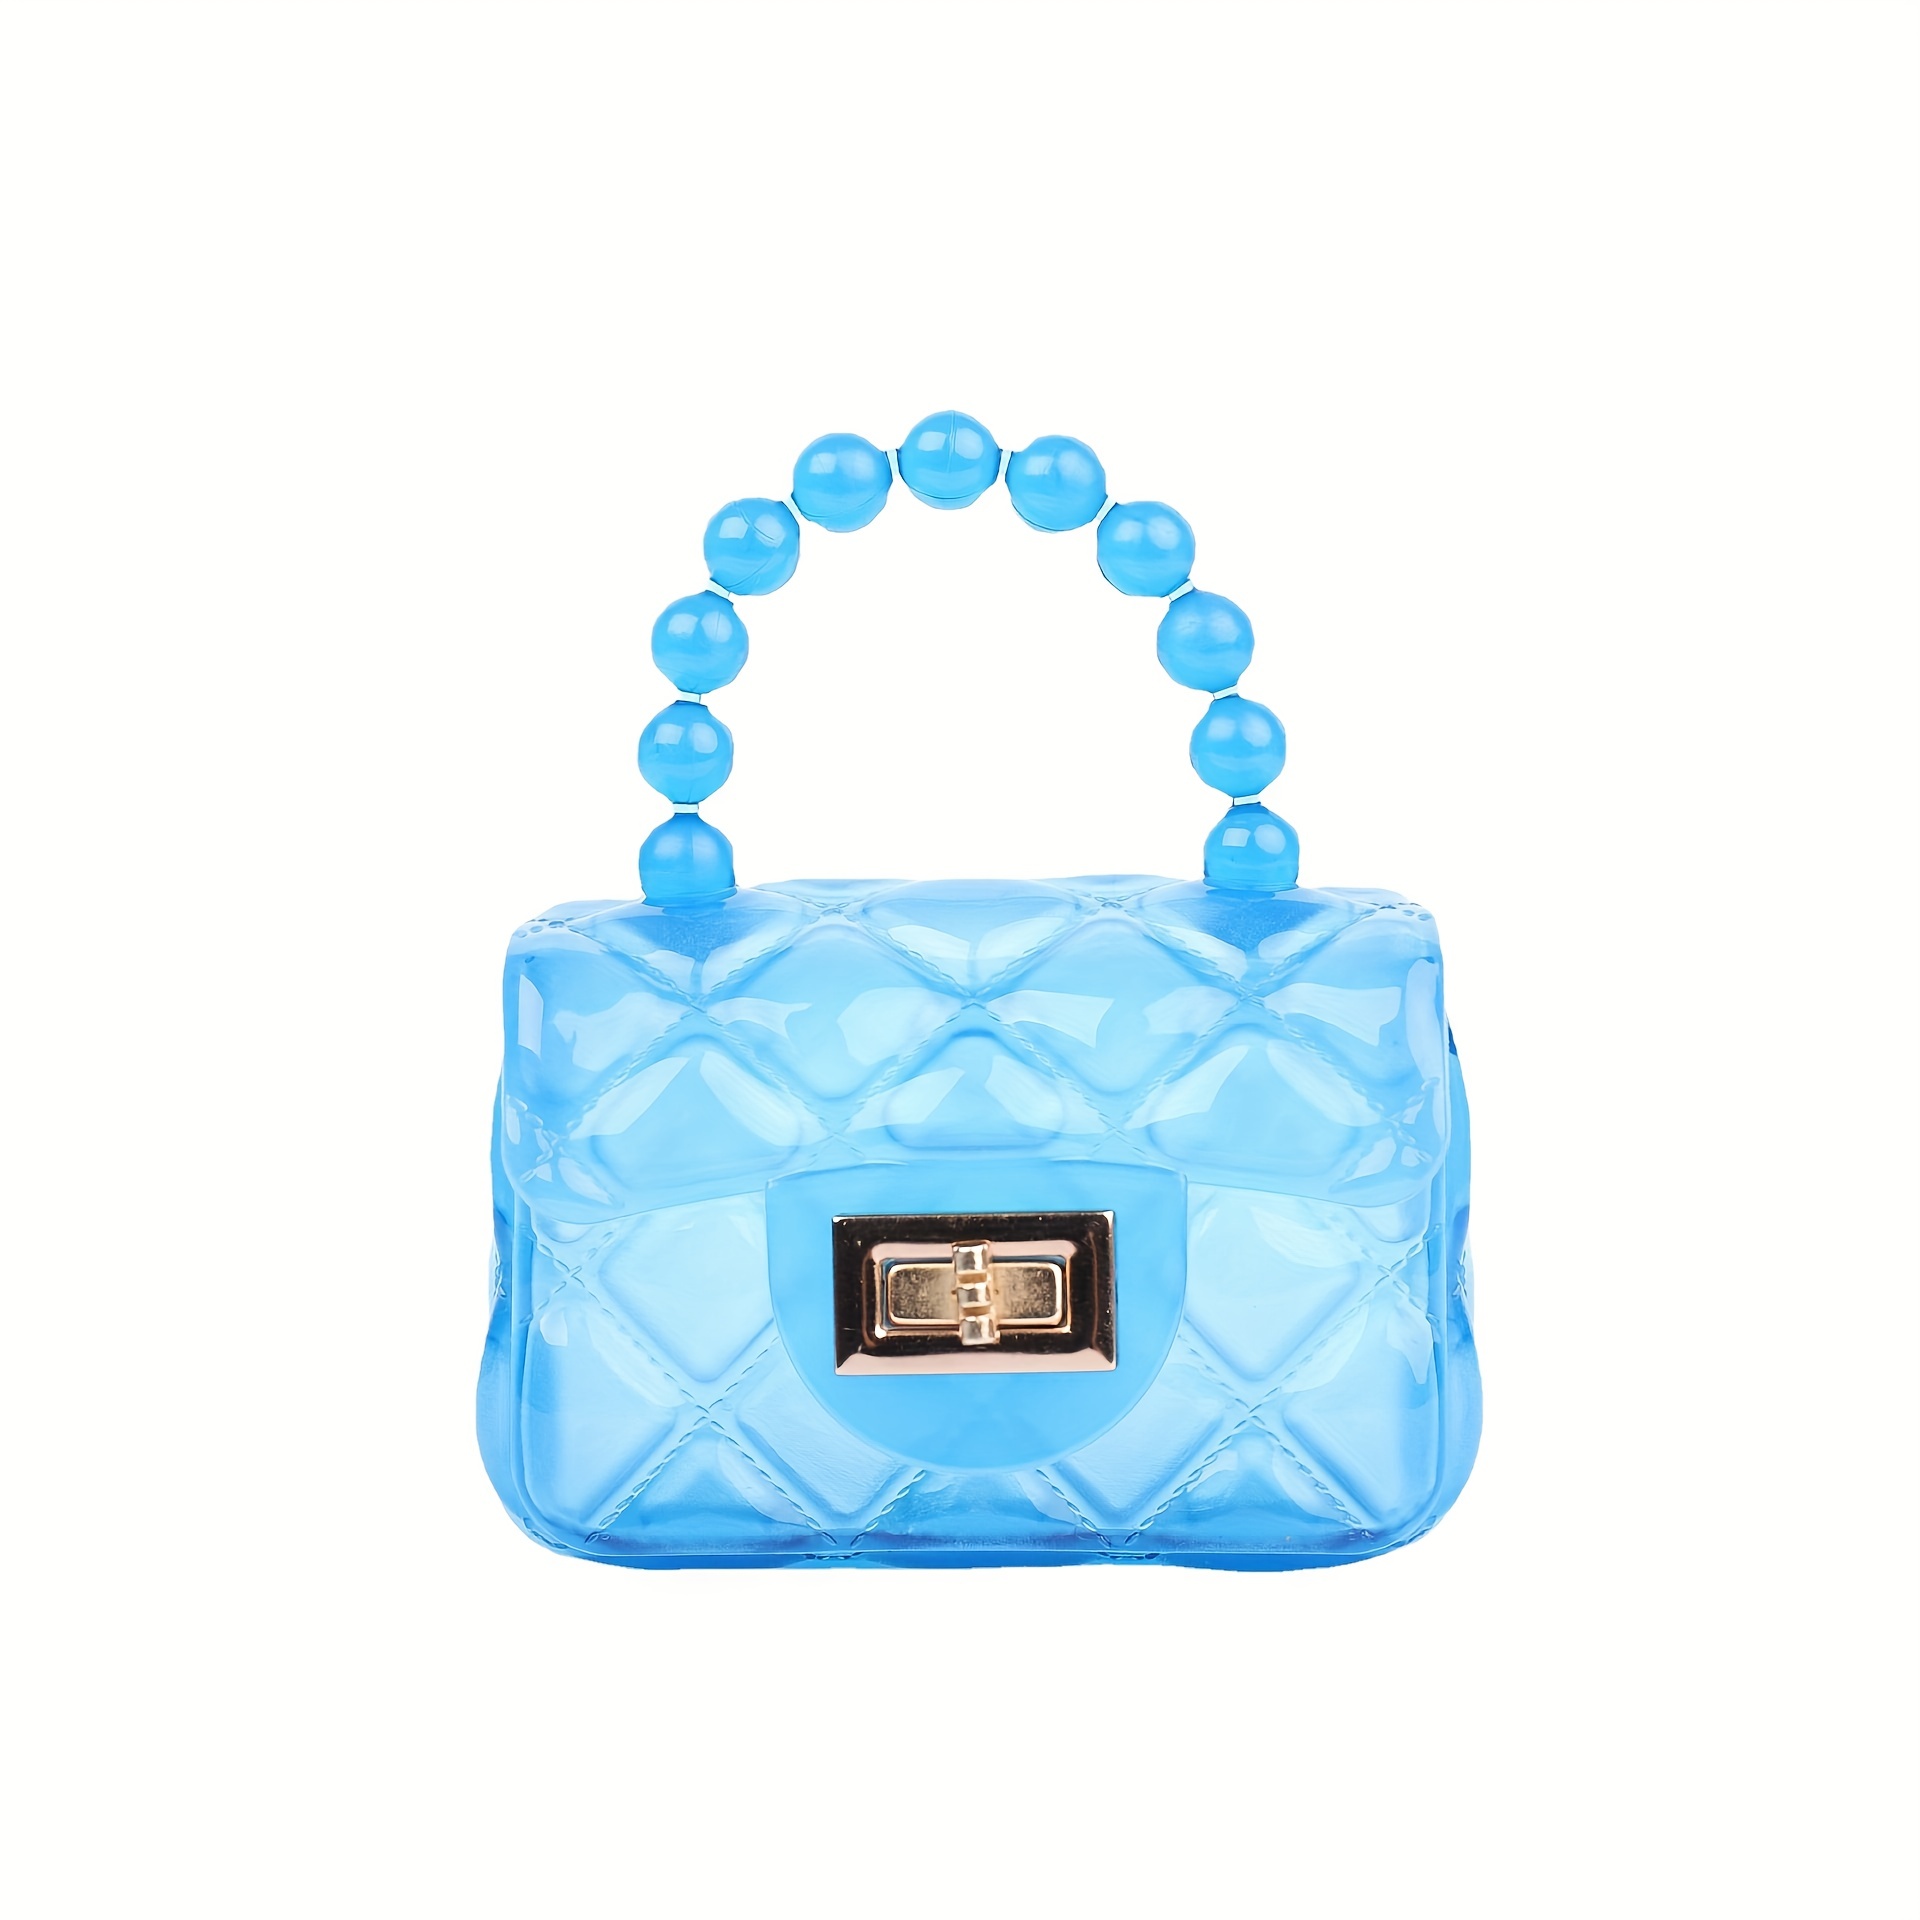 jelly bag Small Handbag See Through Clear Multicolor Chain Purse